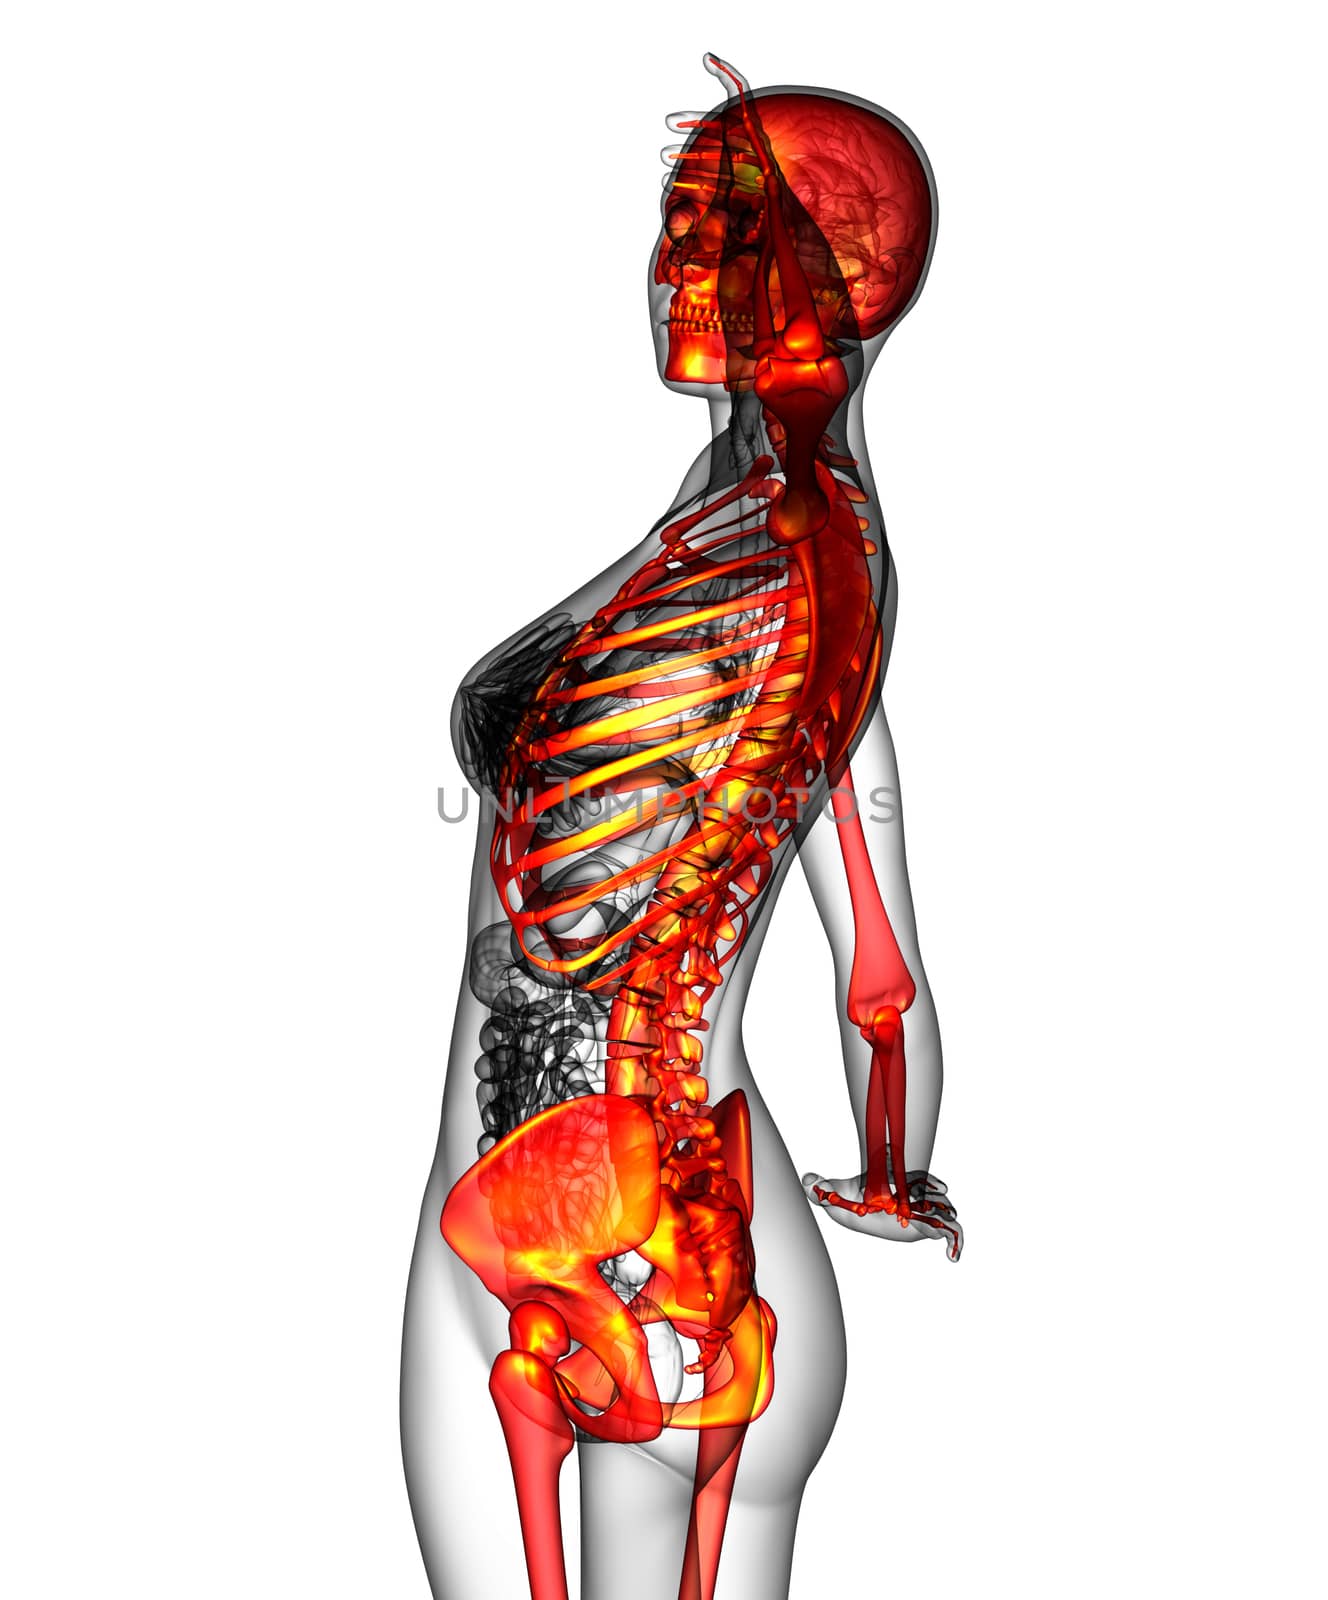 3D medical illustration of the human skeleton by maya2008